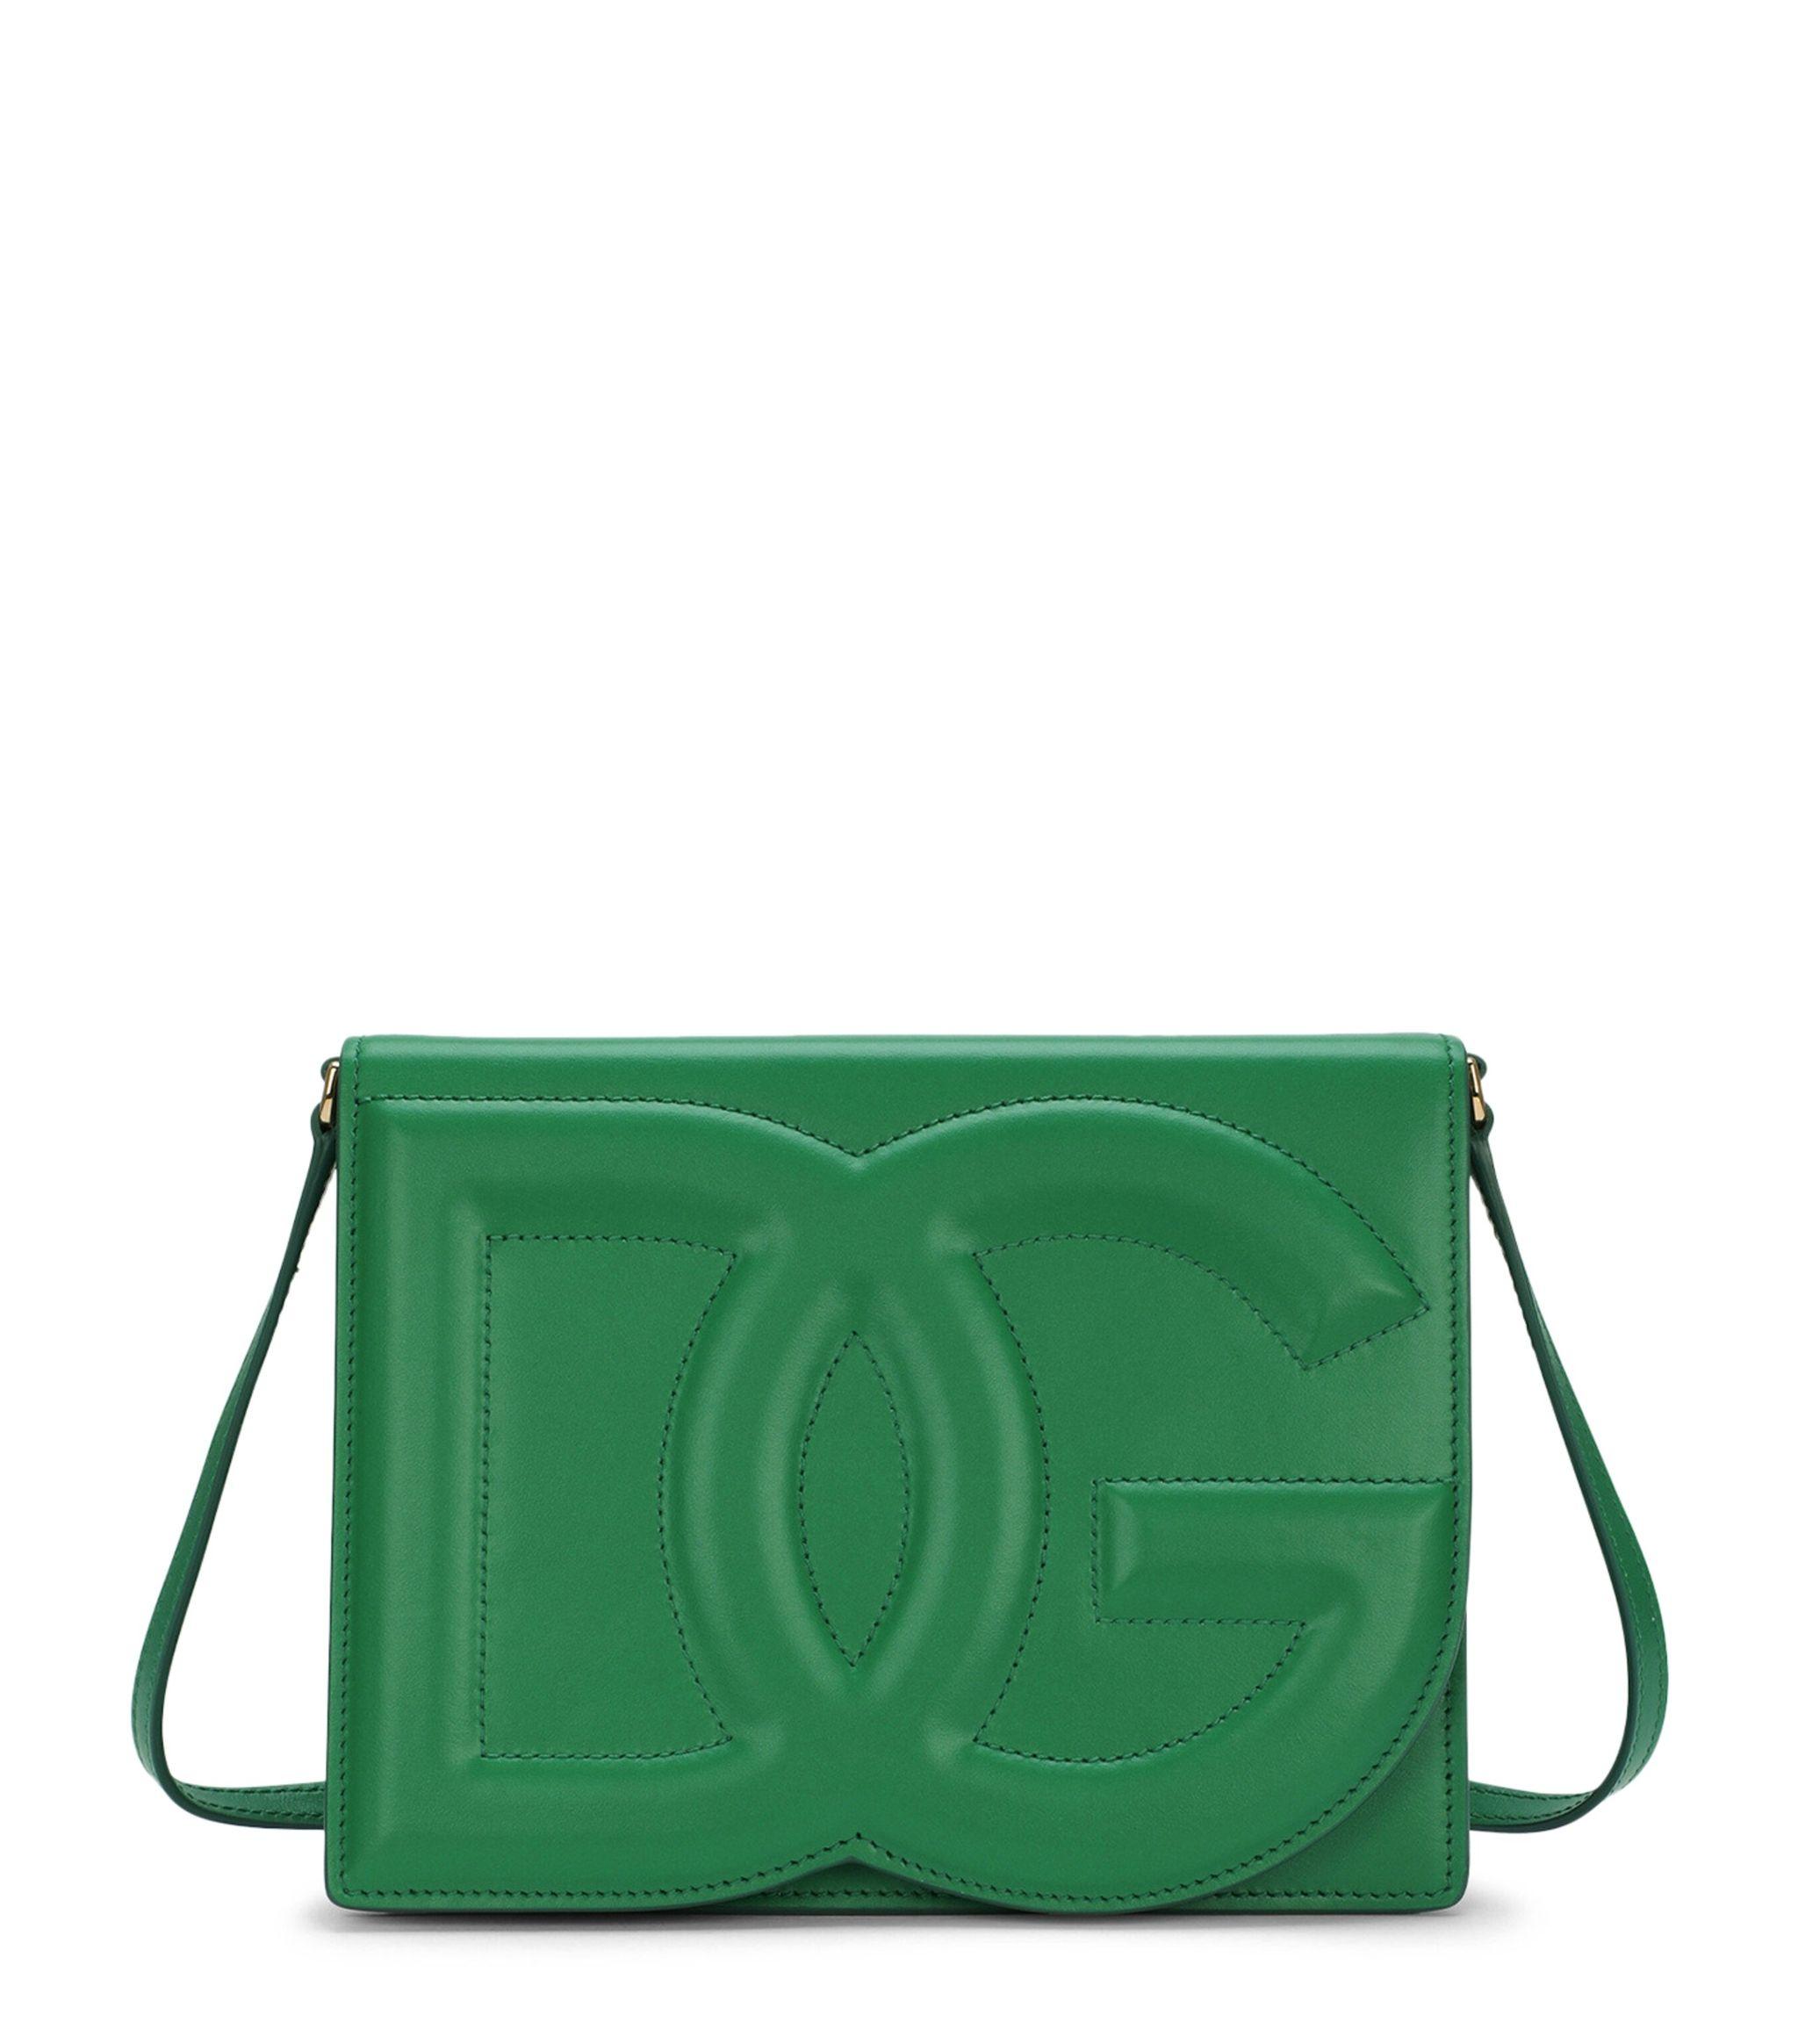 Dolce & Gabbana Dg Cross-body Bag in Green | Lyst